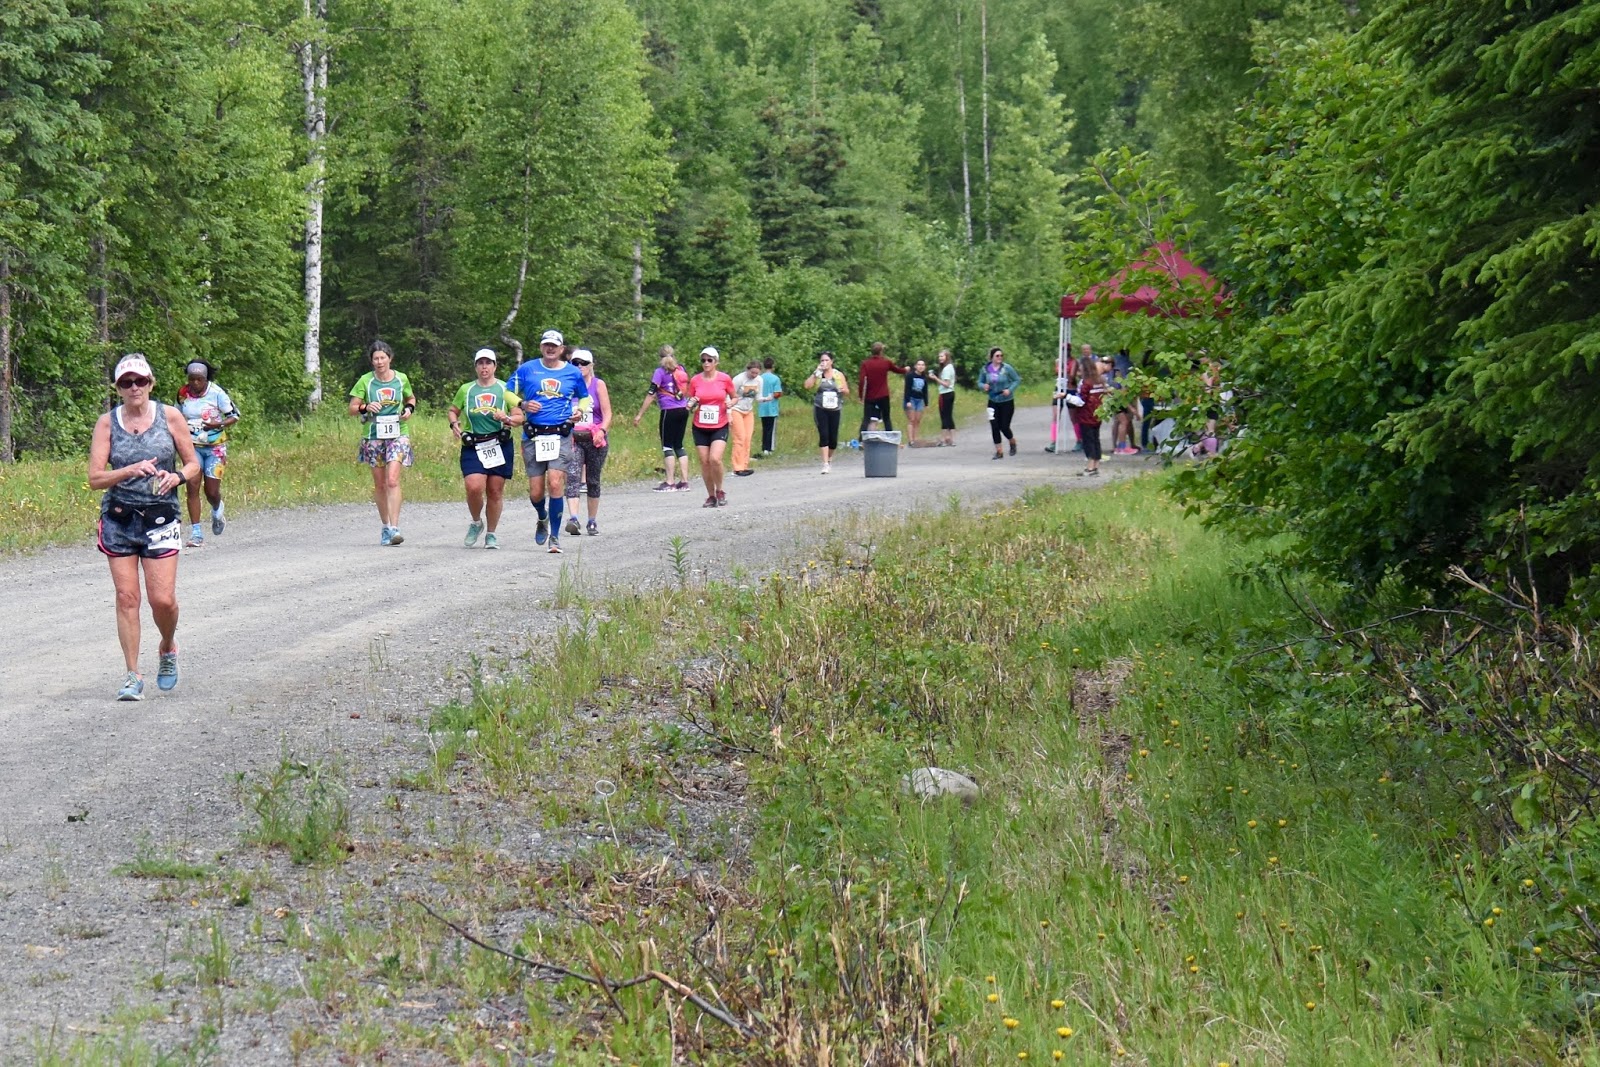 Team Tizzel: Mayor's Midnight Sun Marathon (Anchorage, AK) Report and Video  - June 2017